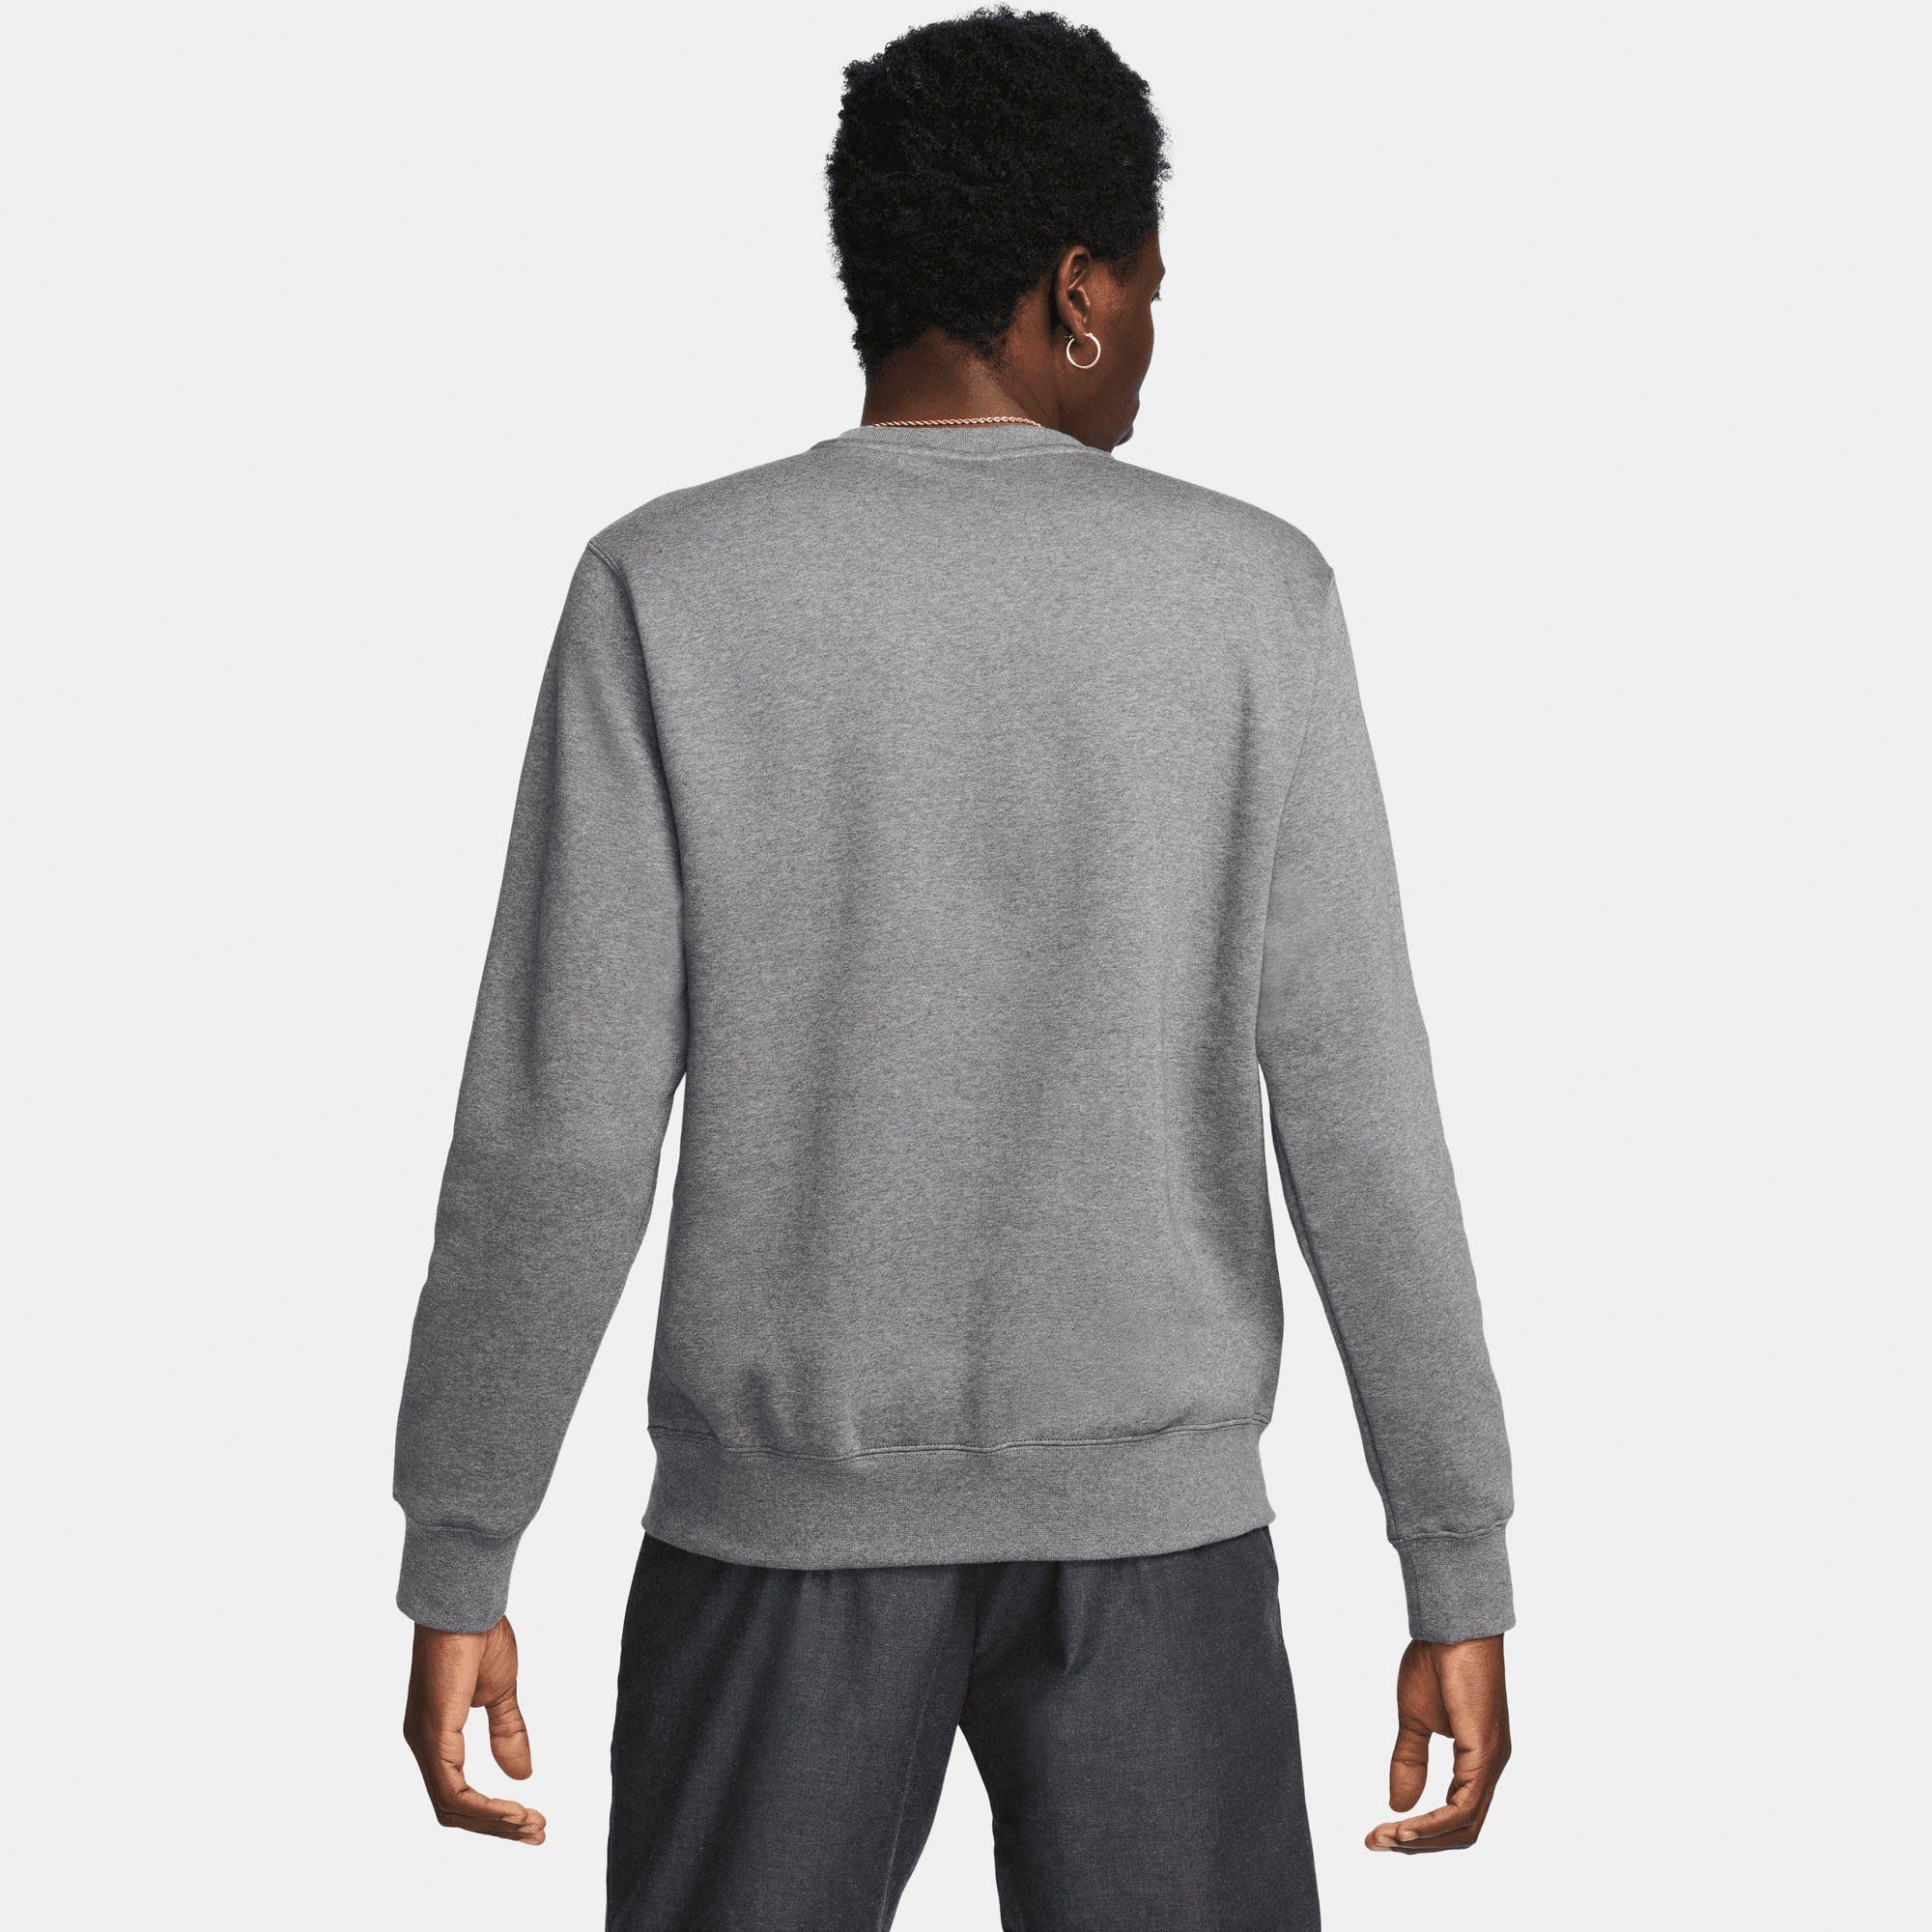 Nike Sportswear Sweatshirt Club Fleece Men's HEATHR CHARCOAL Graphic Crew